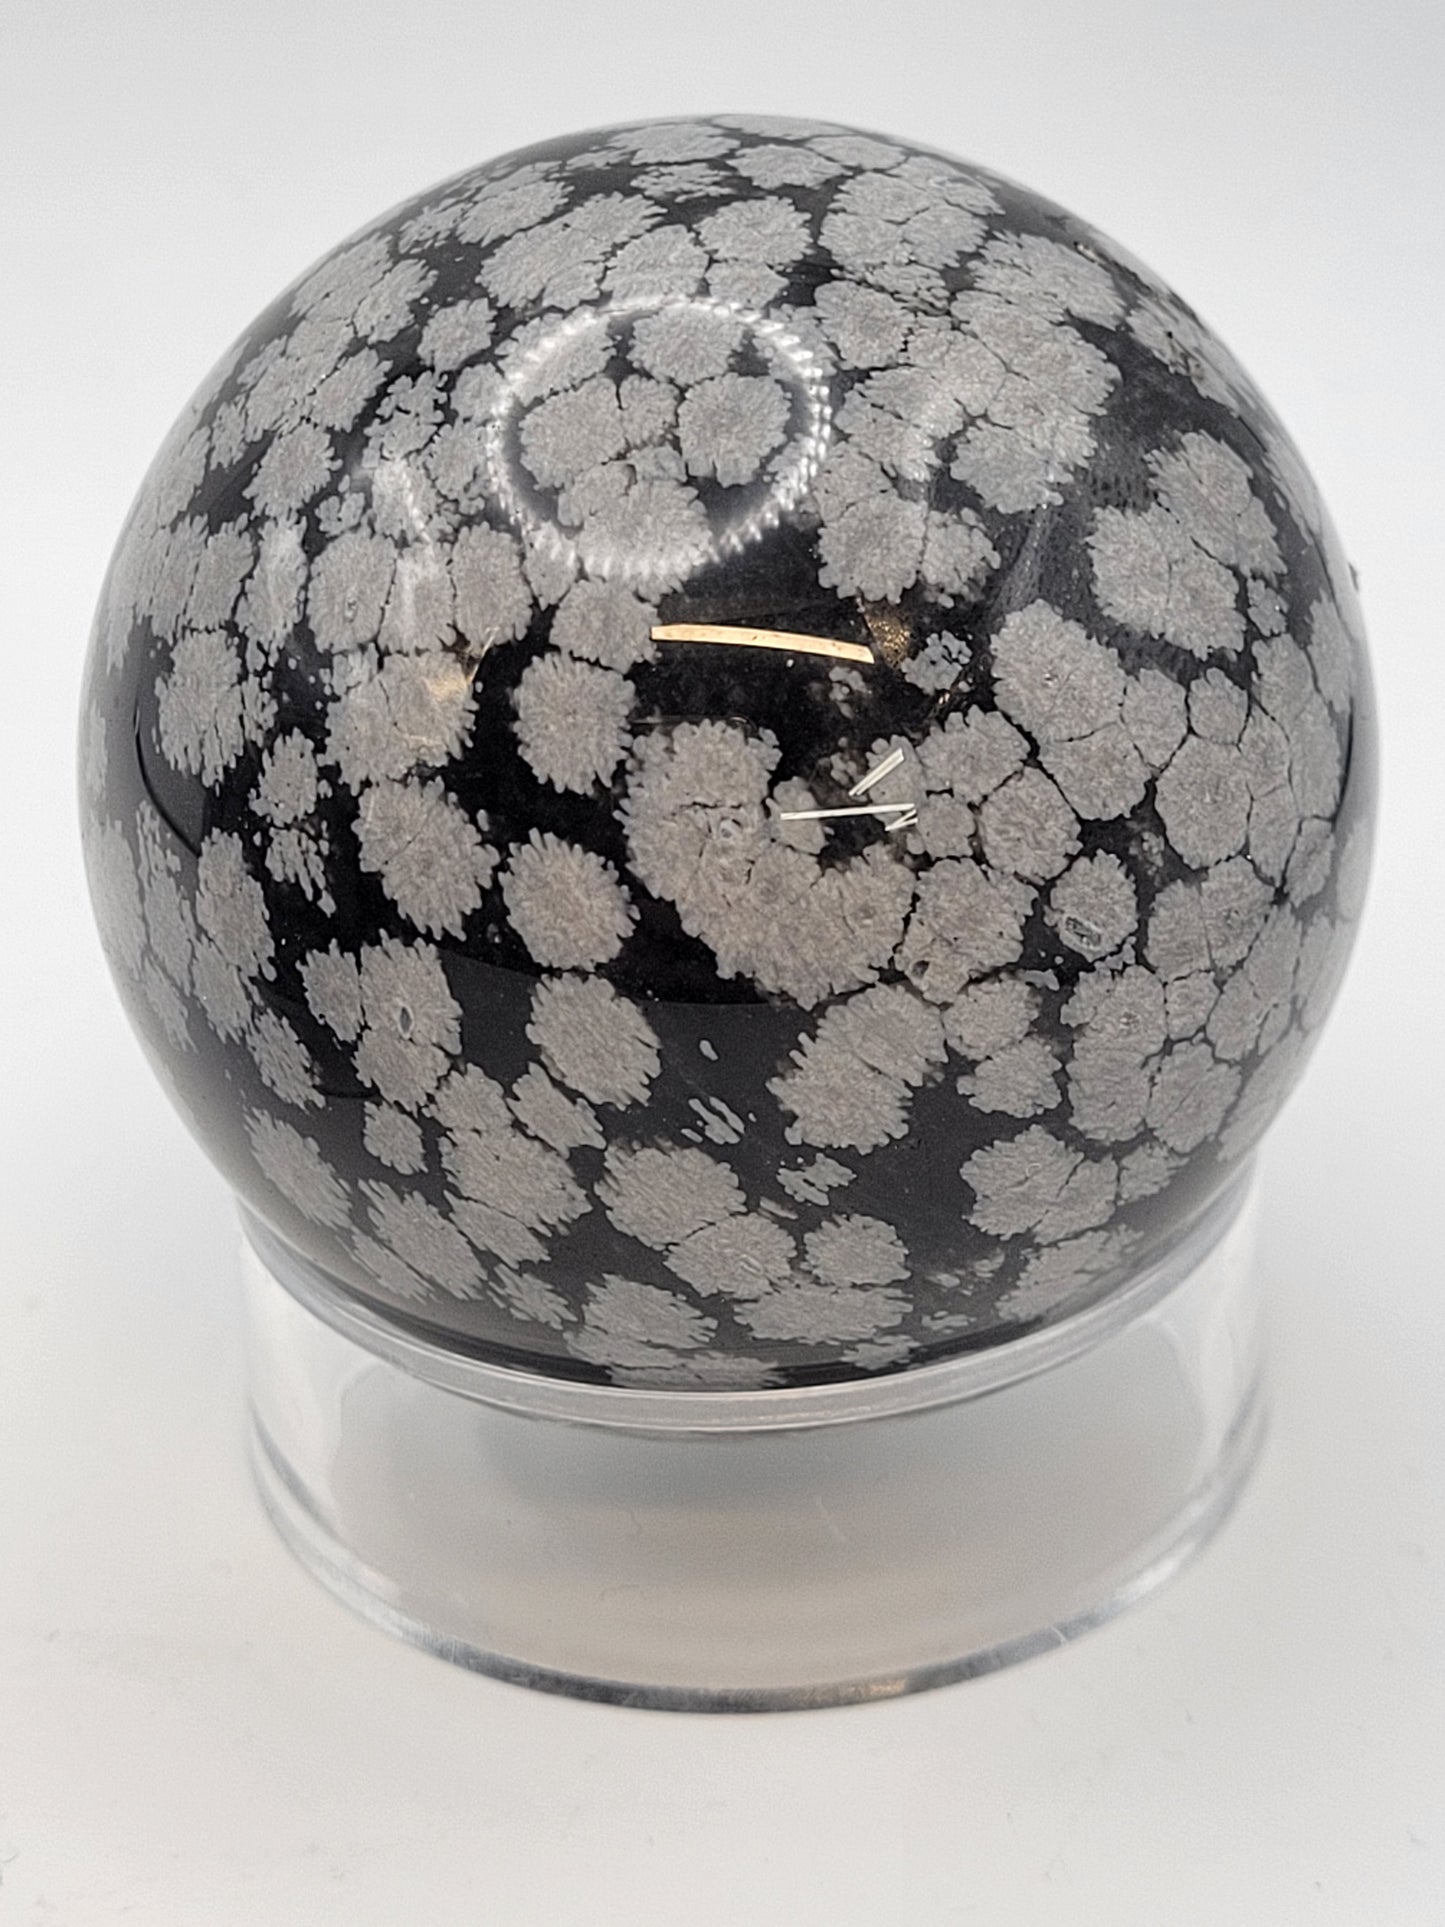 Snowflake Obsidian sphere